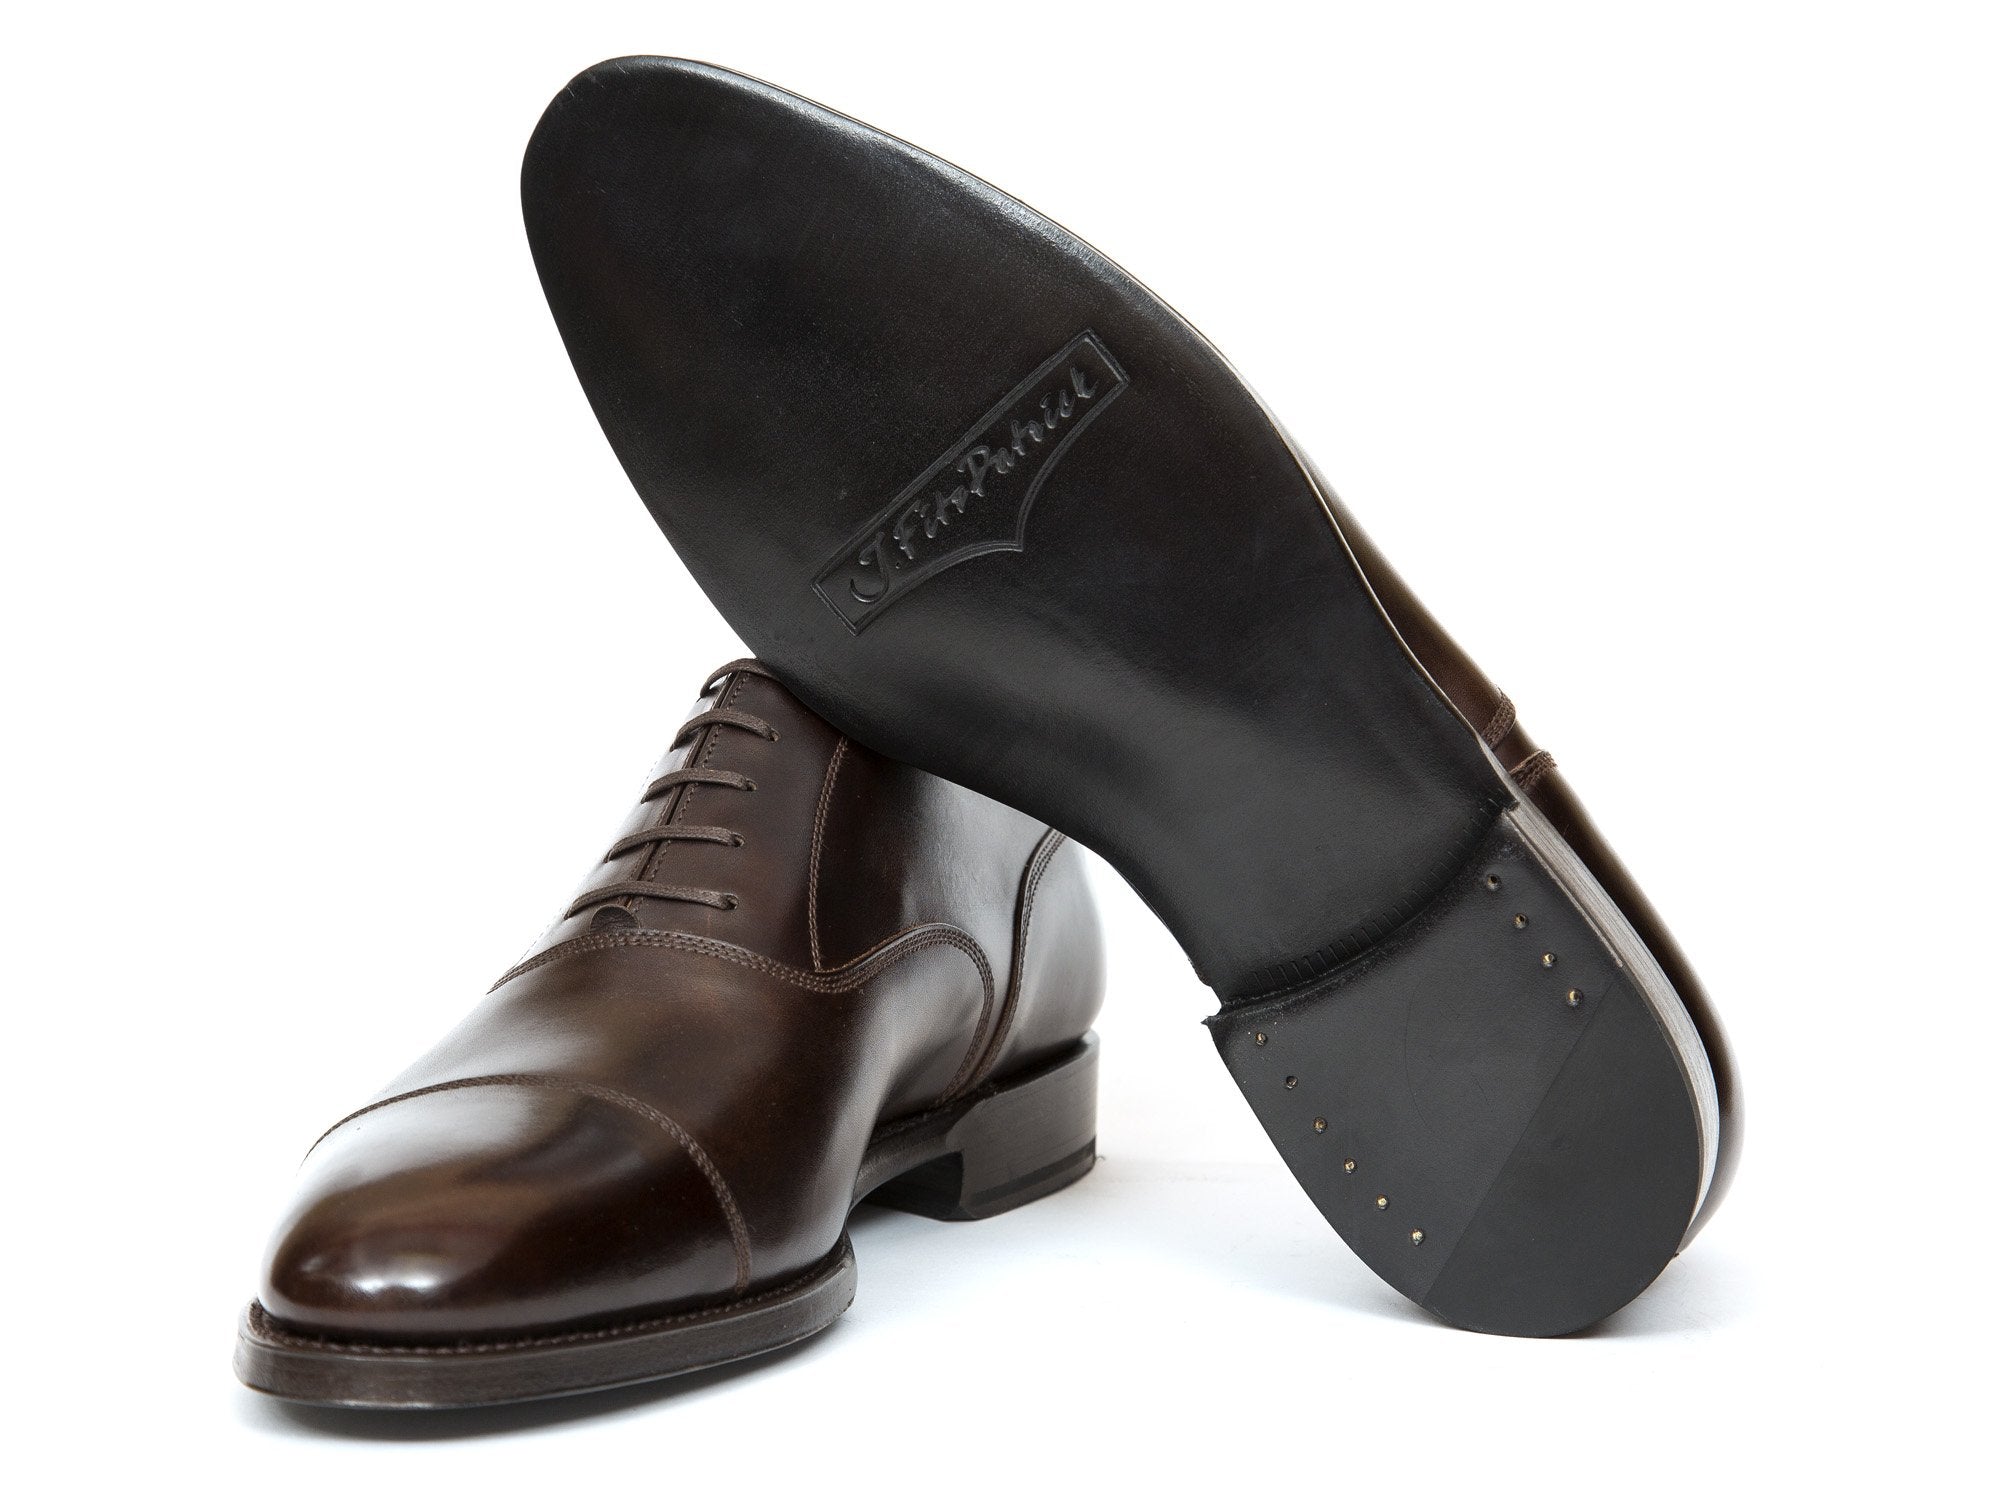 J.FitzPatrick Footwear - Magnolia - Antique Brown Calf - TMG Last